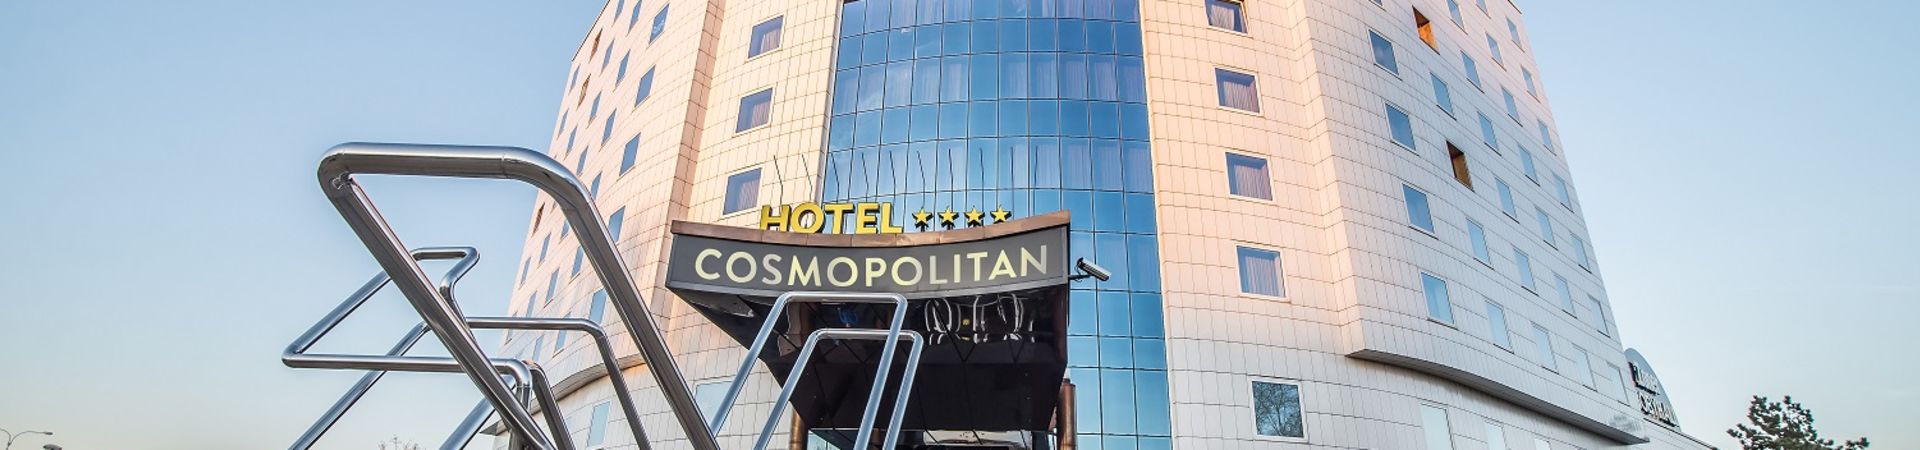 Hotel Cosmopolitan Bobycentrum